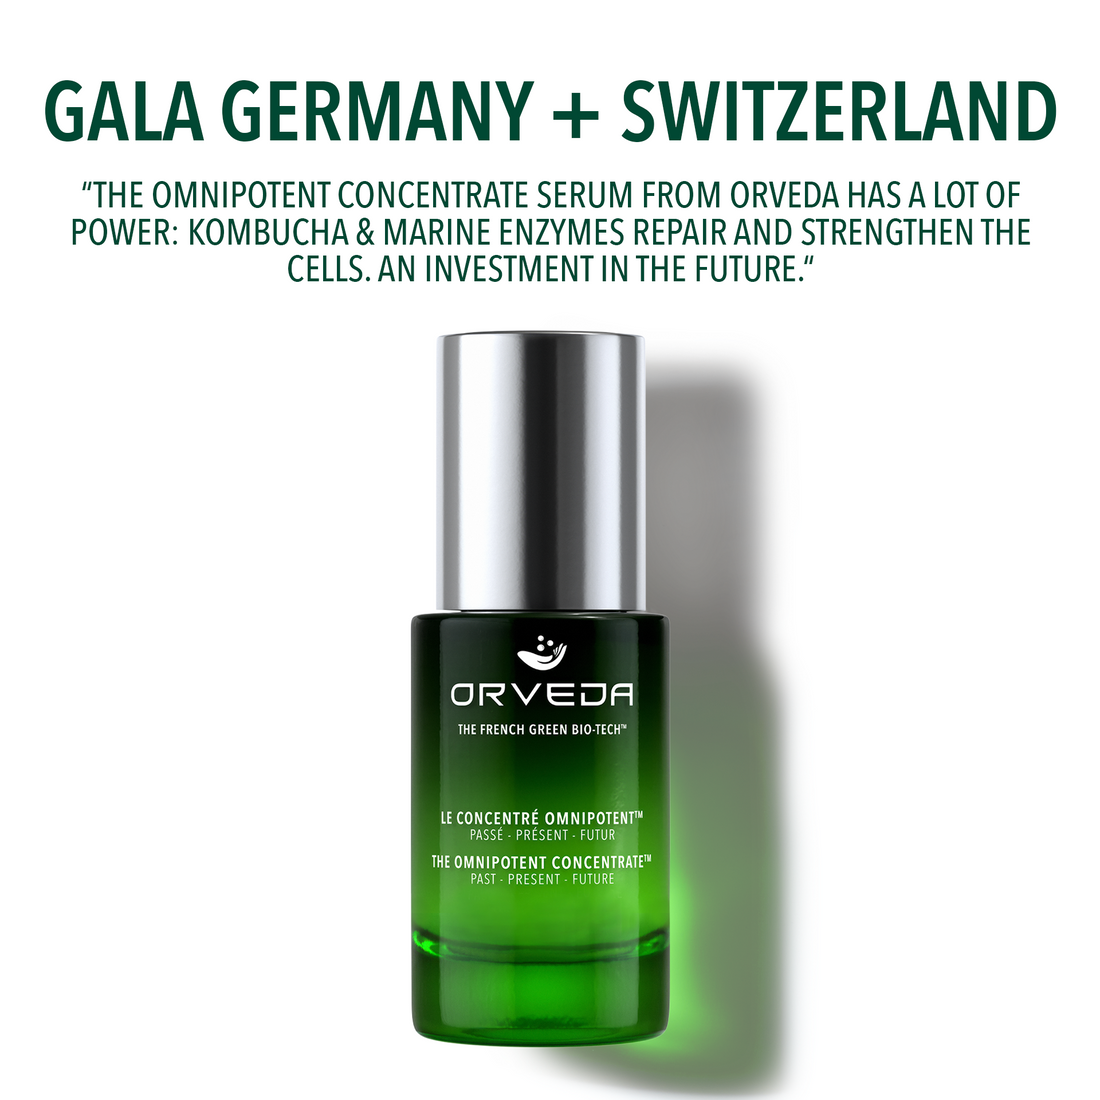 GALA GERMANY + SWITZERLAND